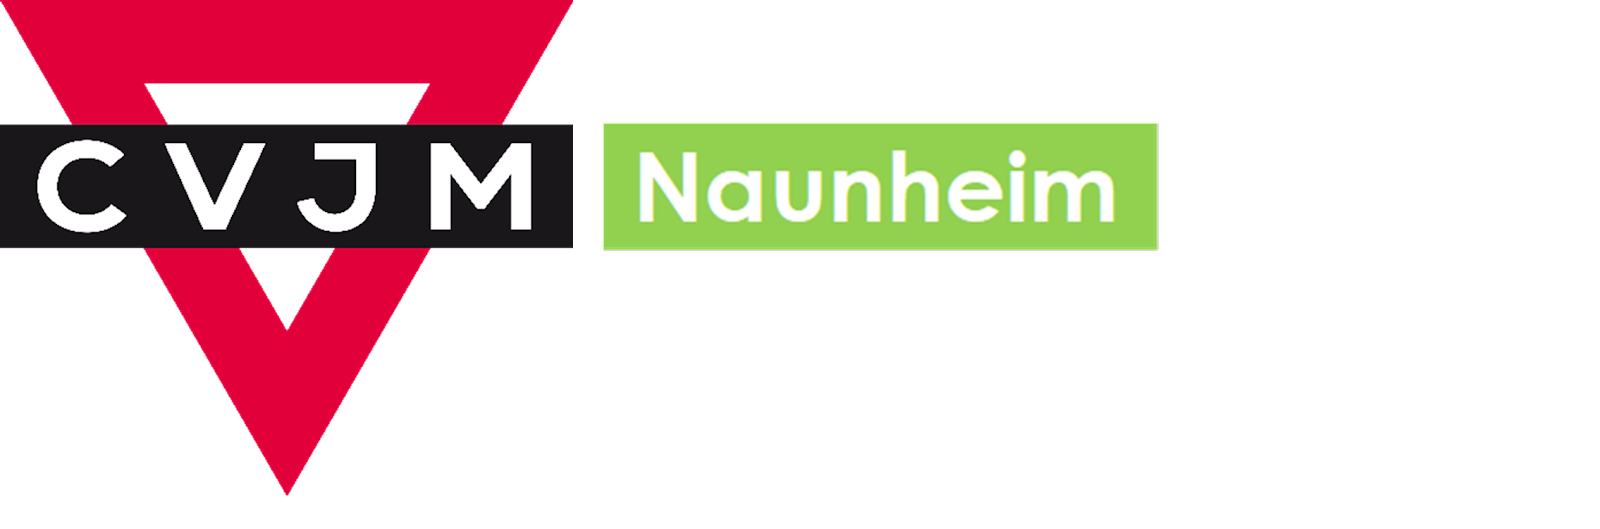 CVJM Naunheim